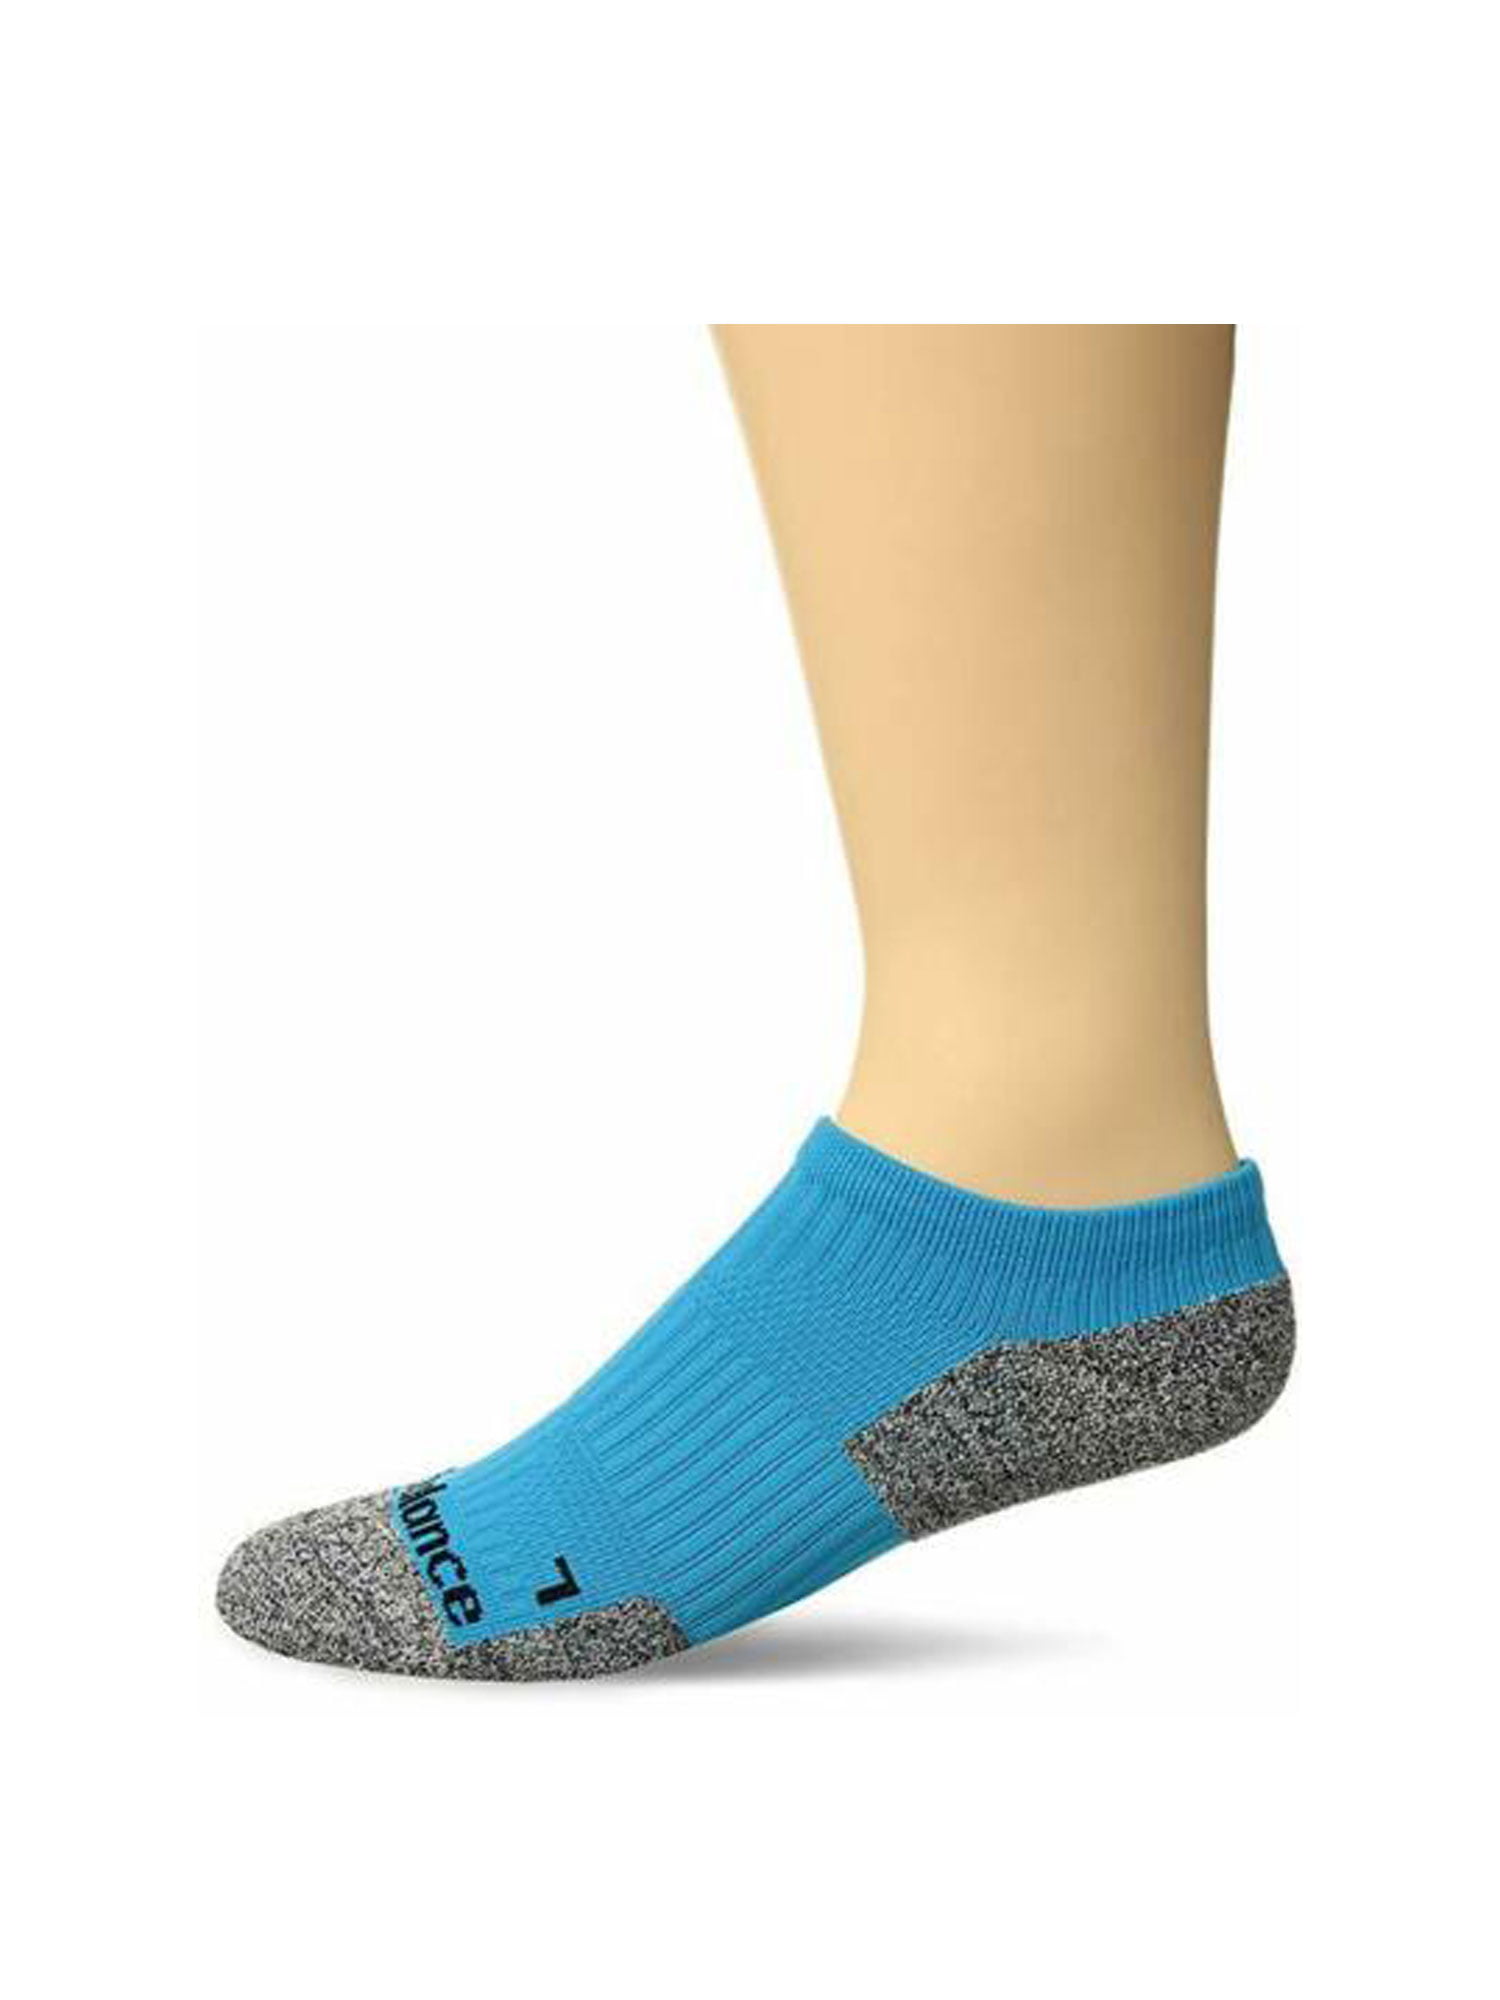 New Balance Running Cushion Women's Athletic Socks N5431 - Walmart.com